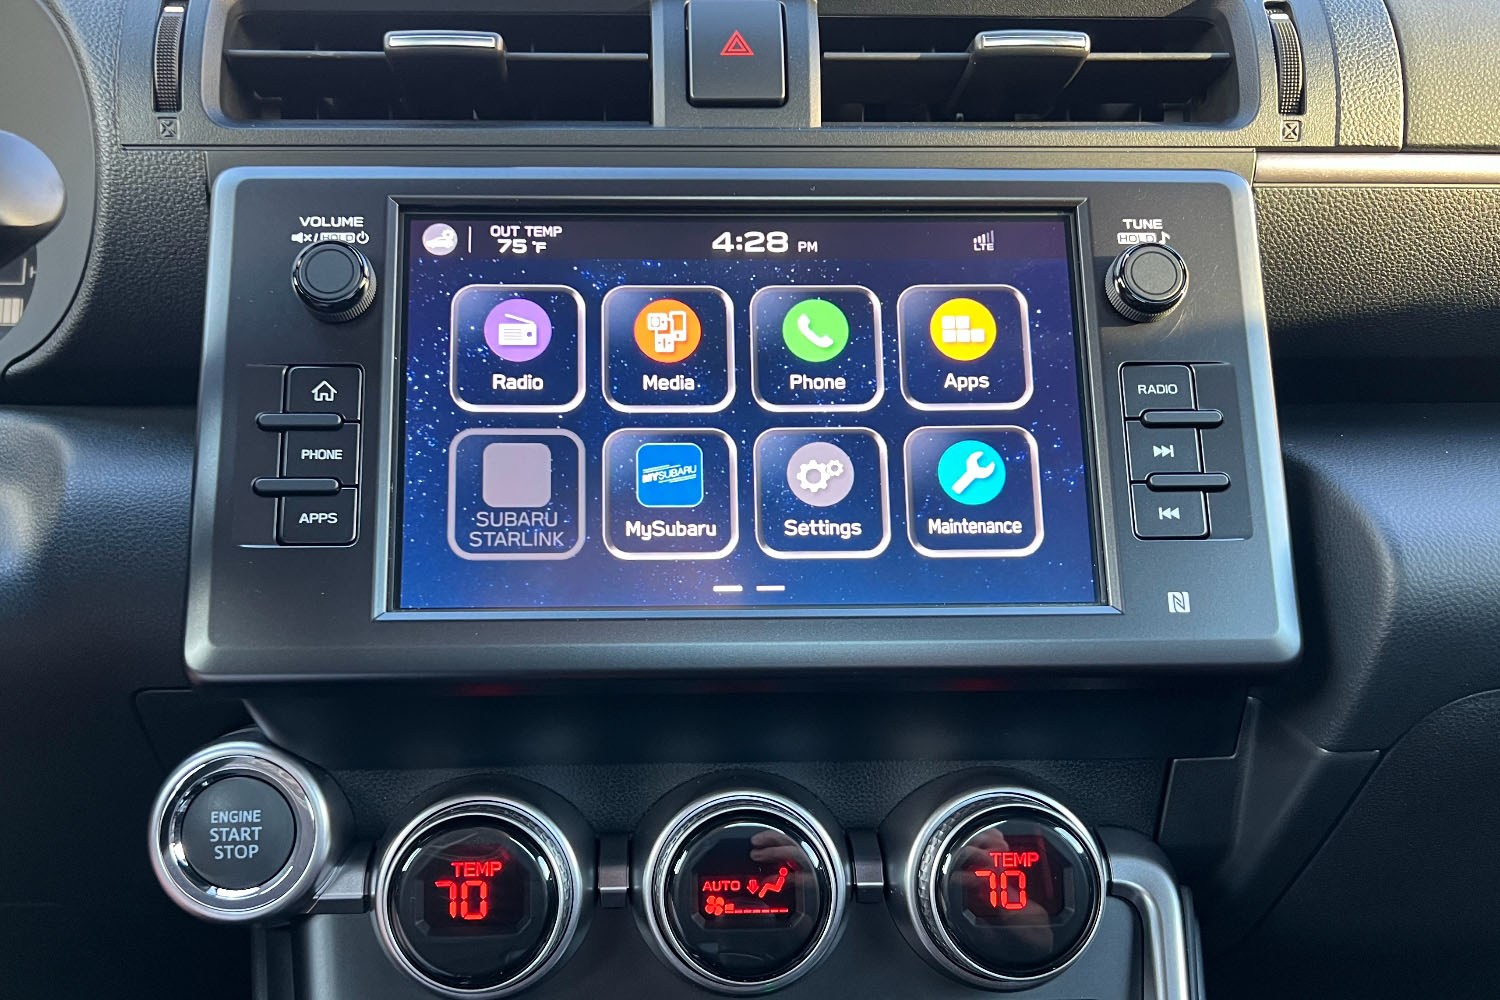 2022 Subaru BRZ infotainment system, screen